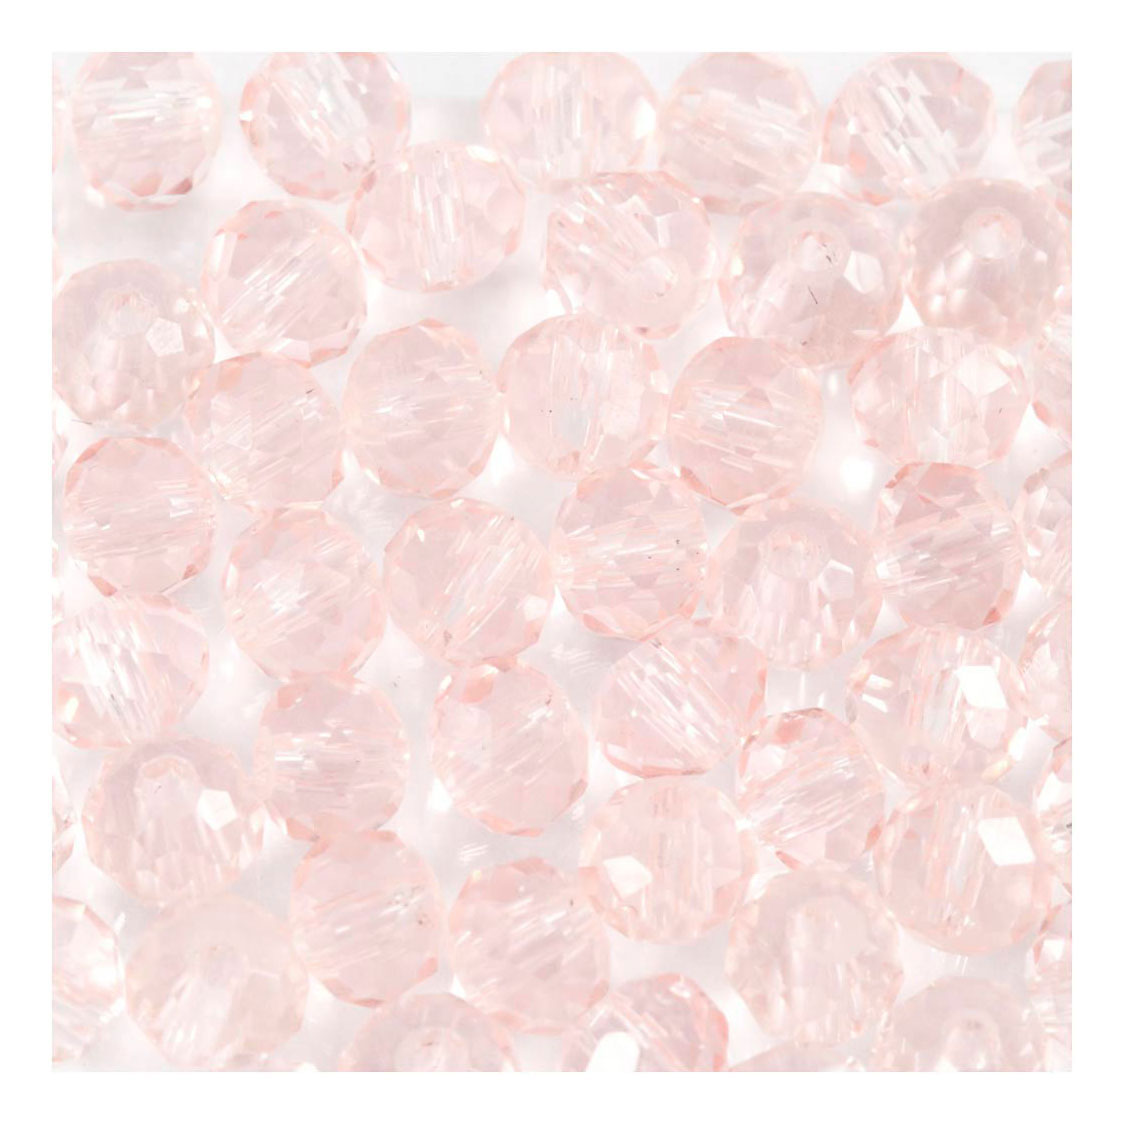 Perles de verre rose clair, 45 pièces.